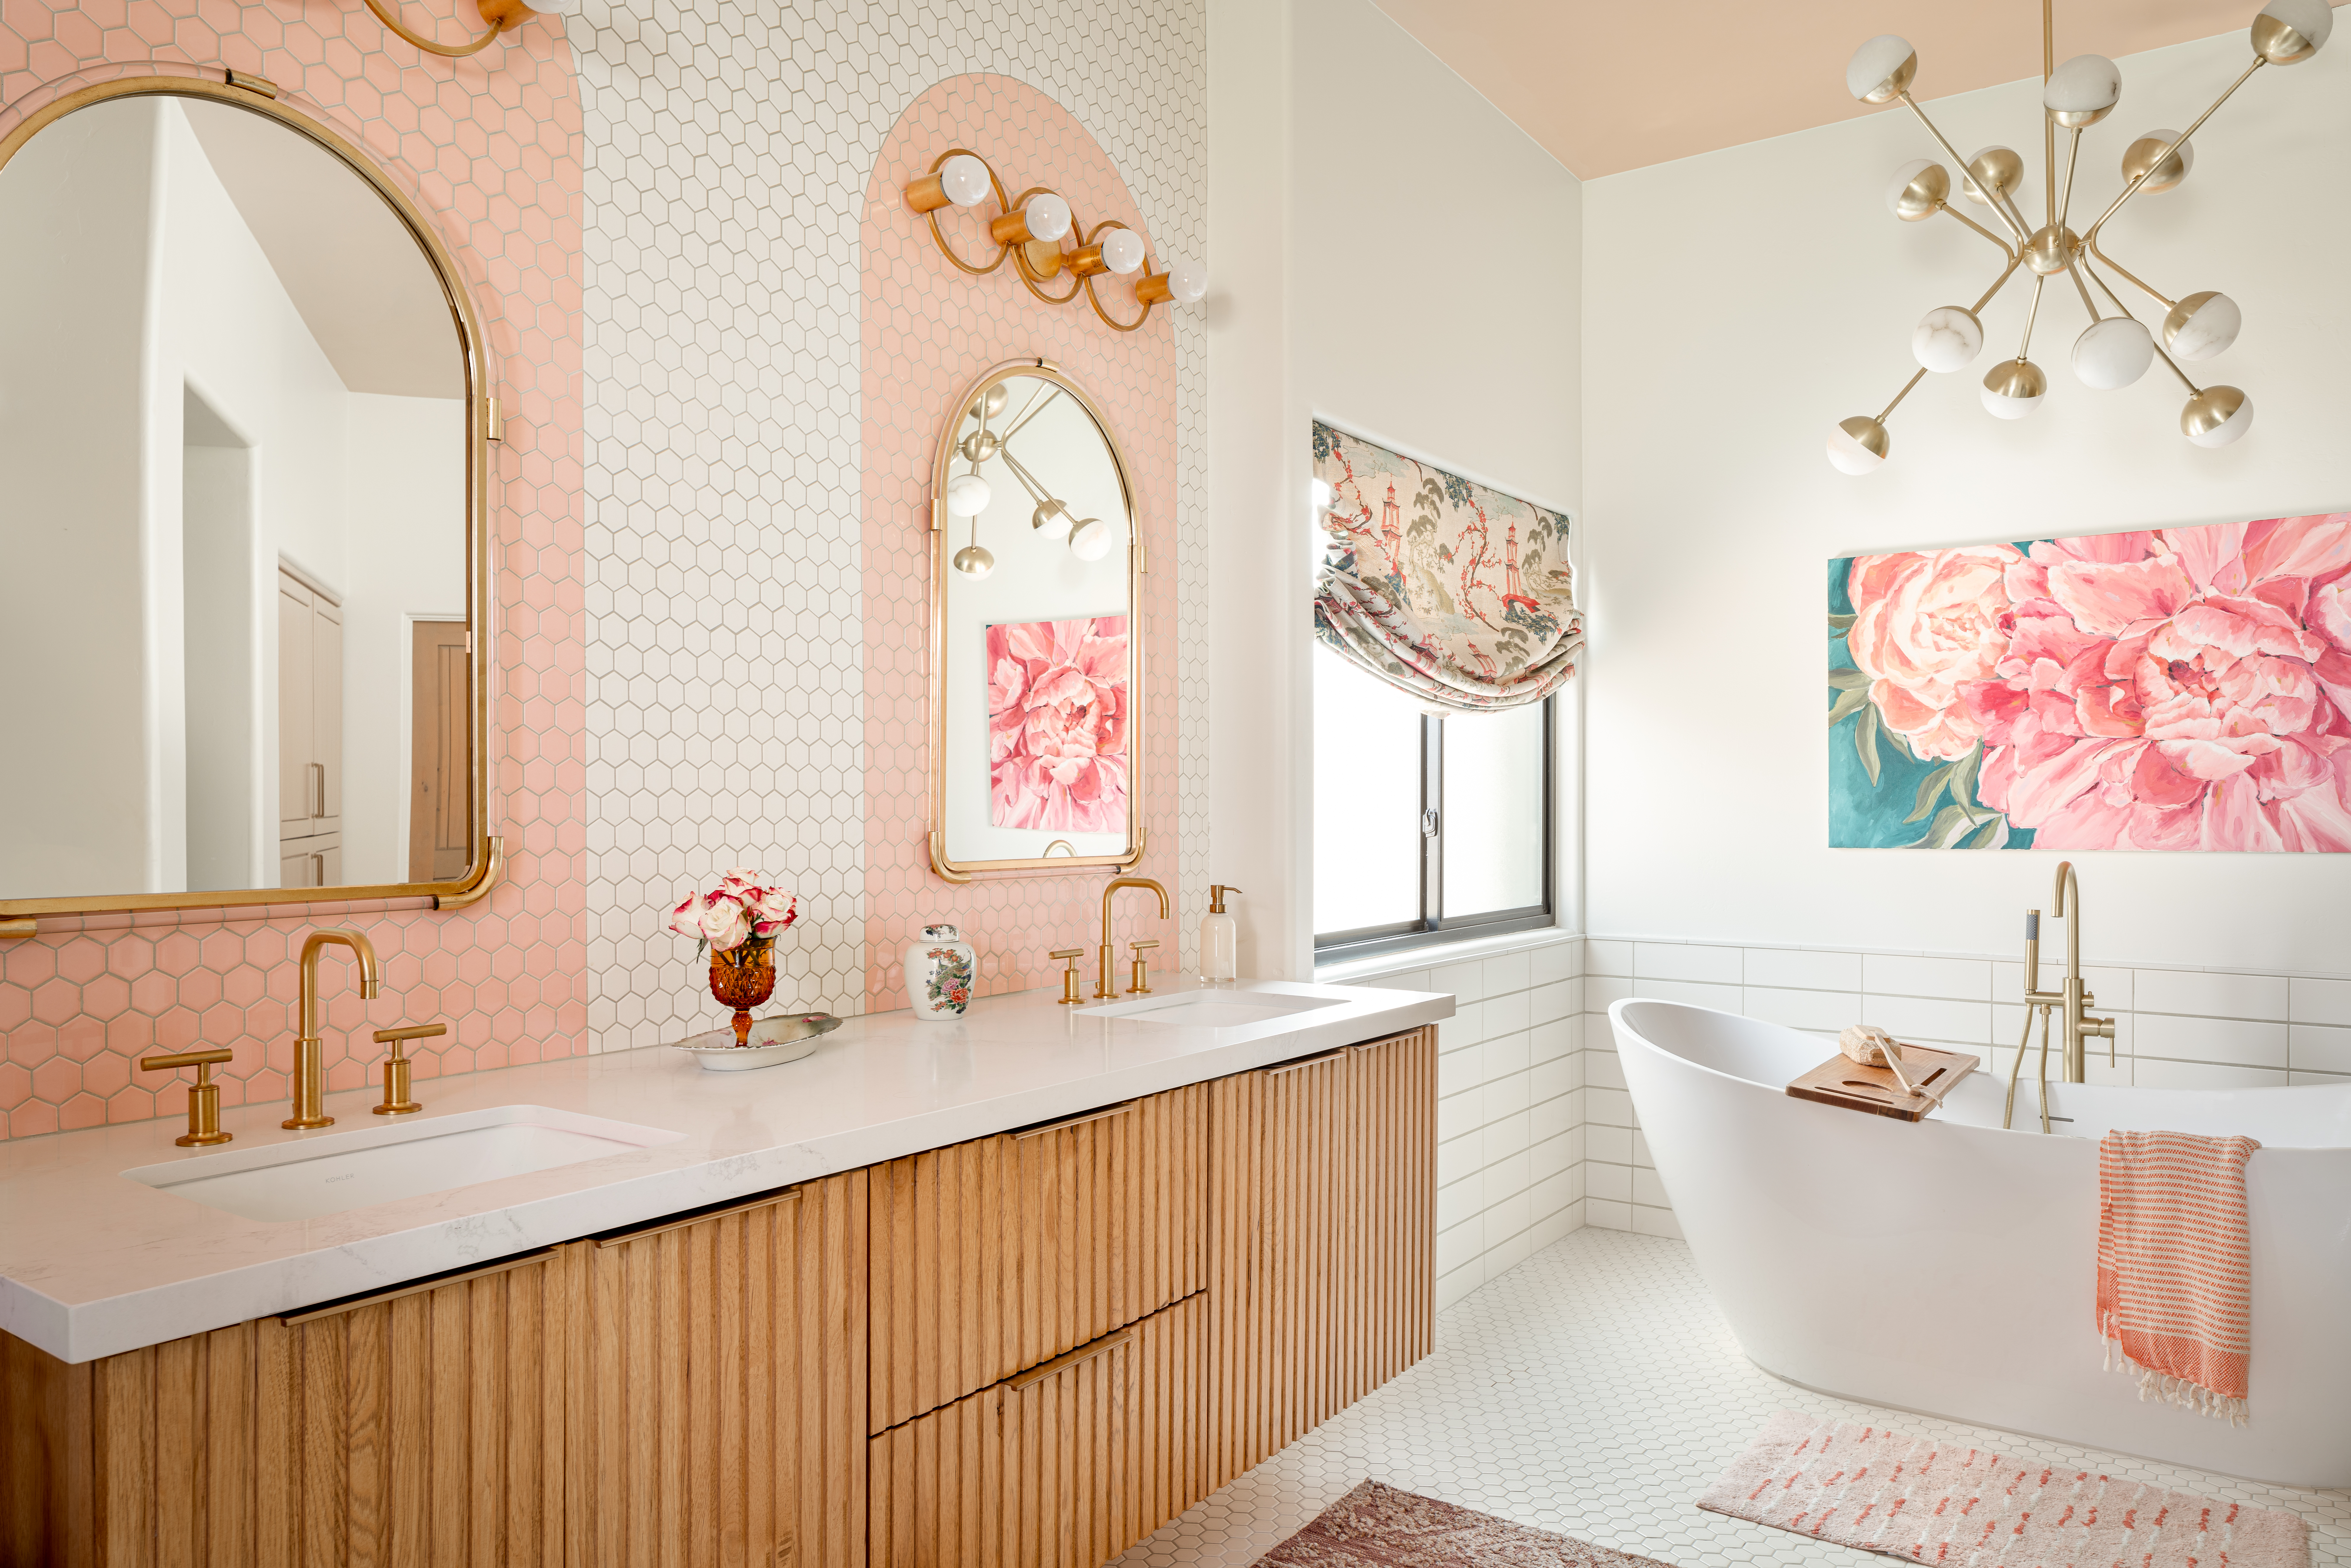 white and pink bathroom tiled backsplash with tiled tub surround